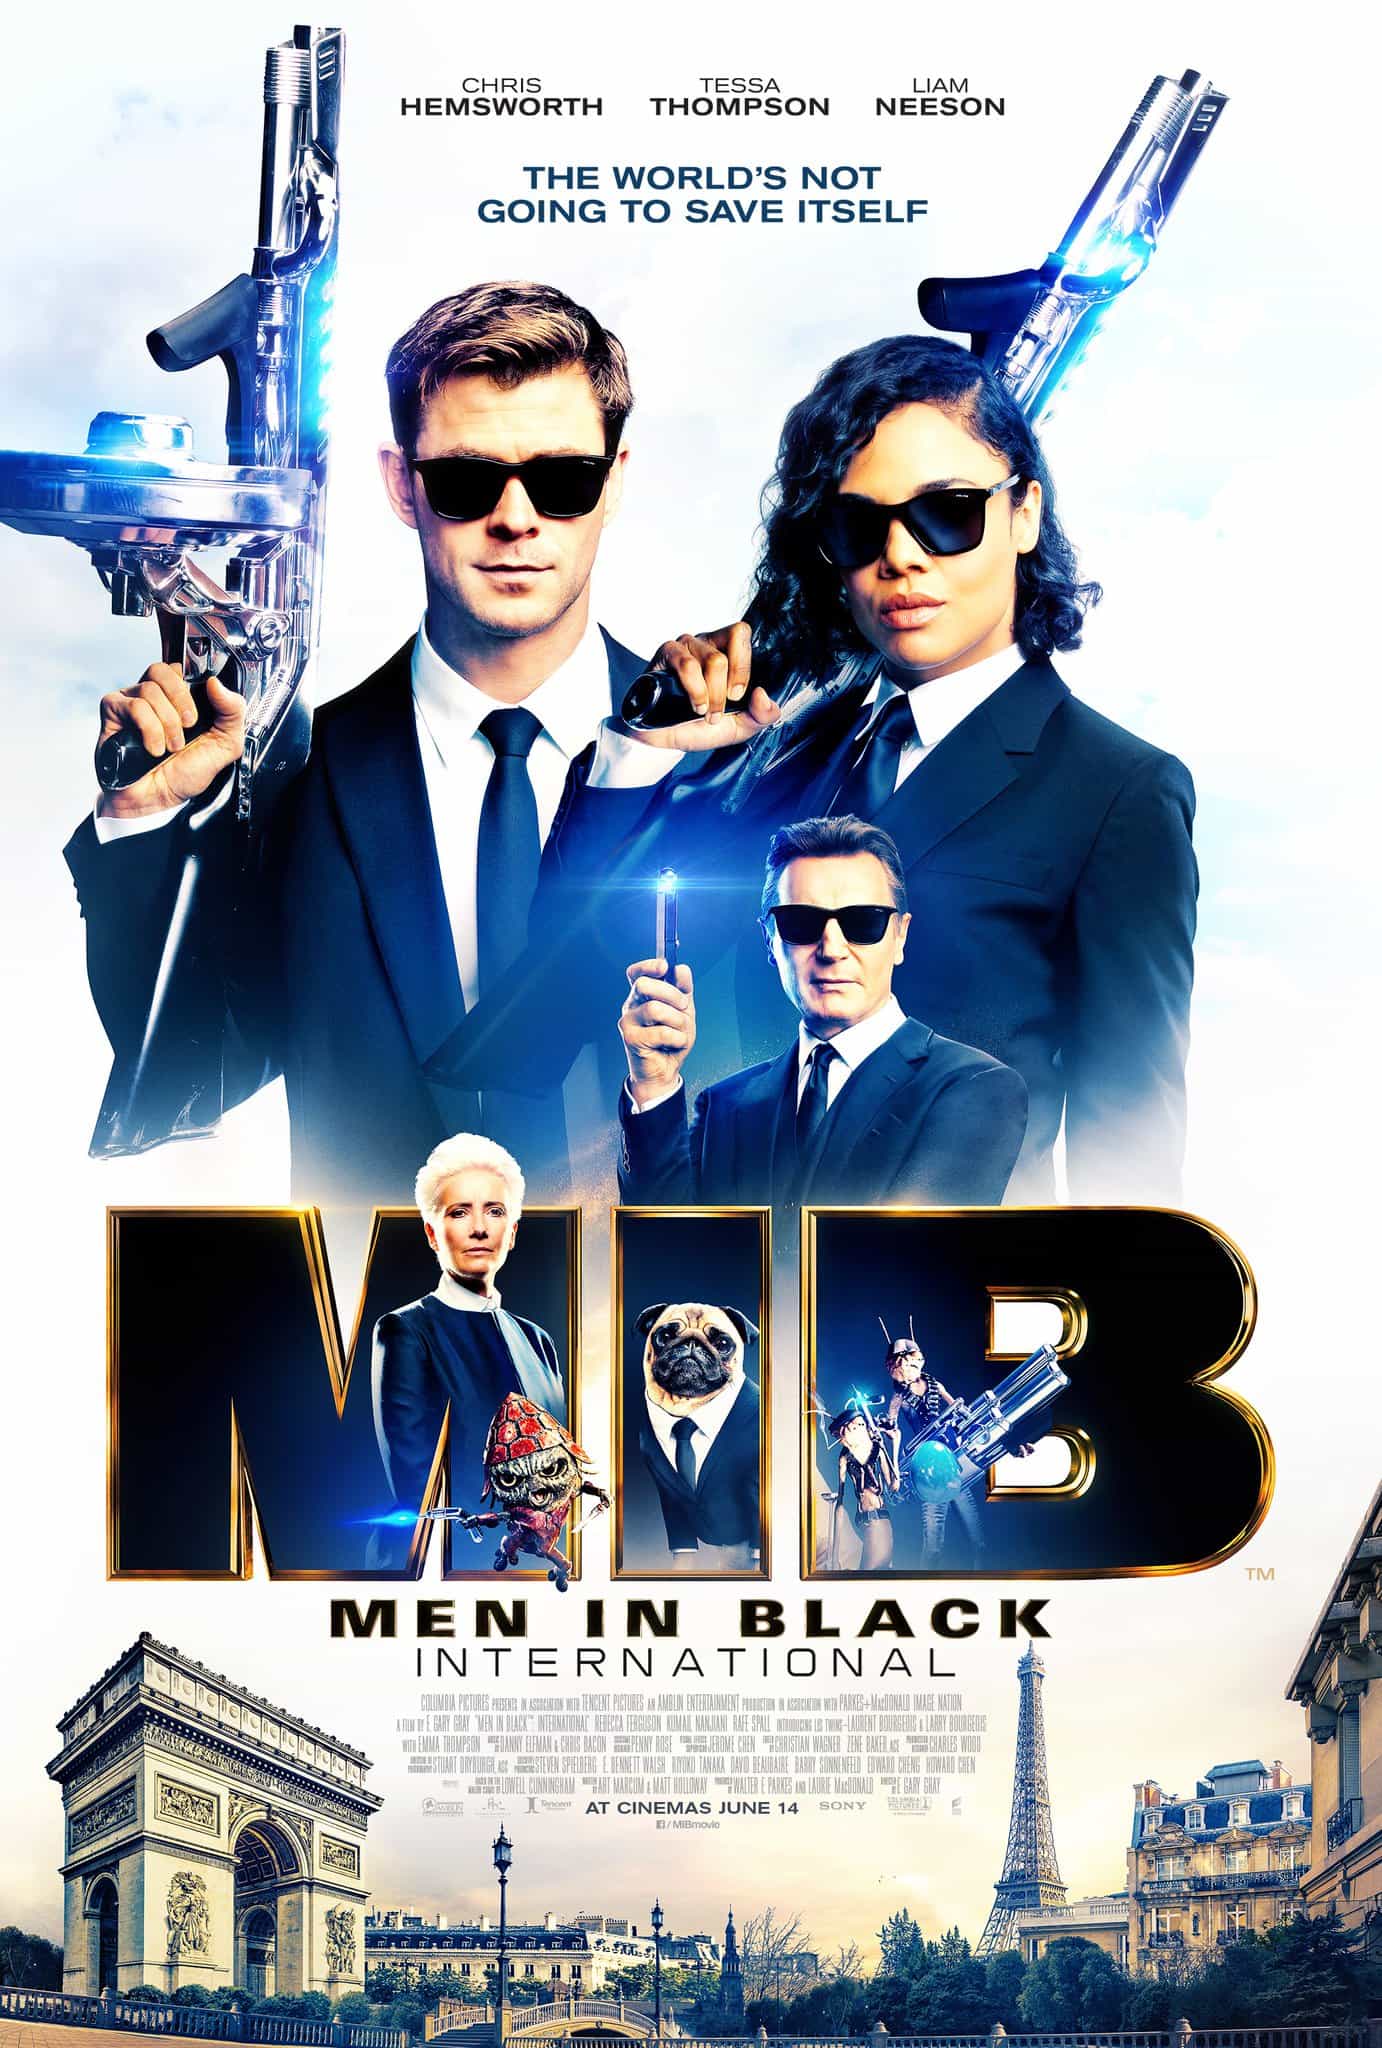 New trailer for Men In Black International - release date 14th July 2019